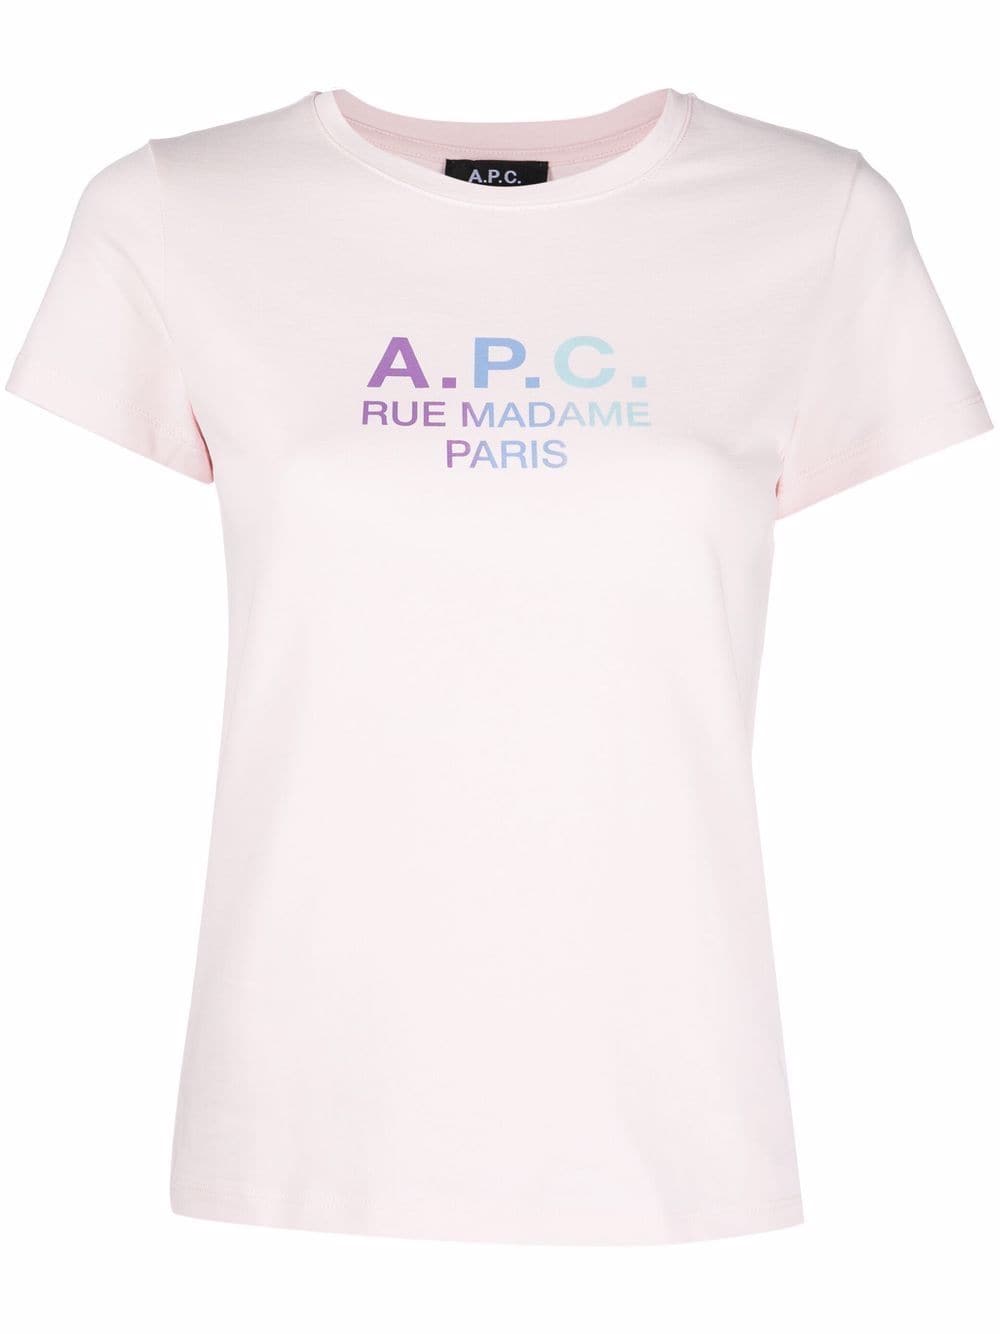 A.P.C. Rue Madame Paris cotton T-shirt - Pink von A.P.C.